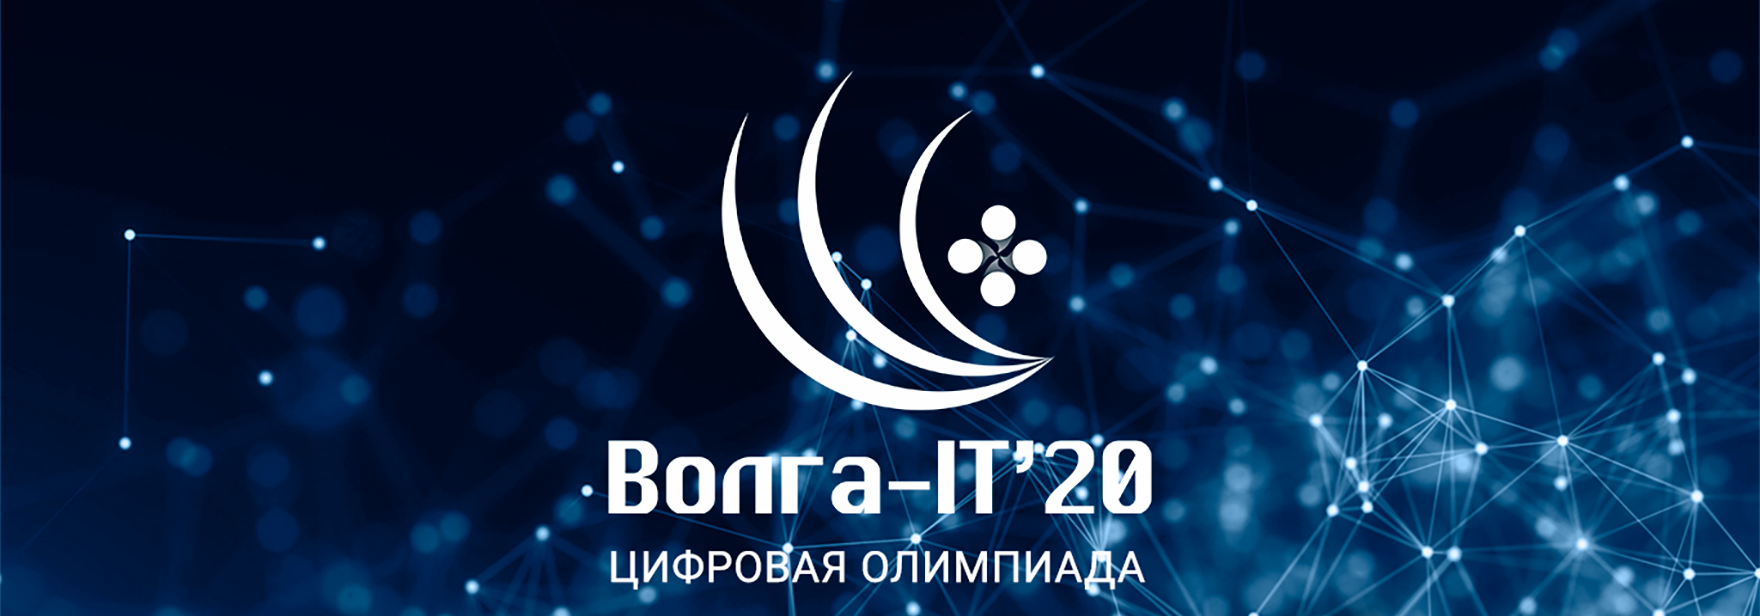 1 марта – 11 октября, онлайн: олимпиада «Волга-IT'20»